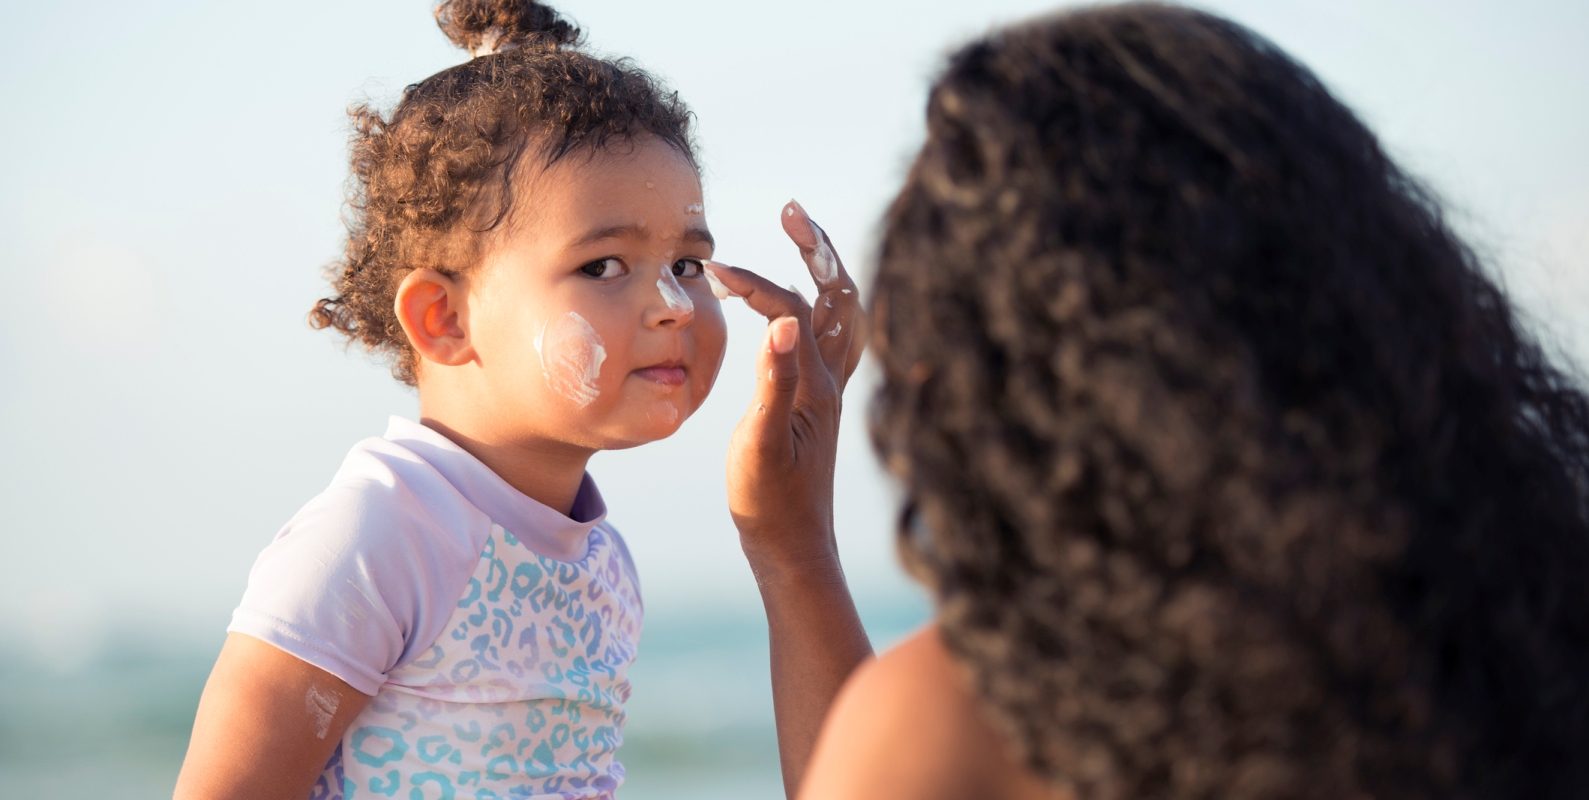 Sunscreen Causes Rash On Toddler Singapore Mum Warns About Sunscreen